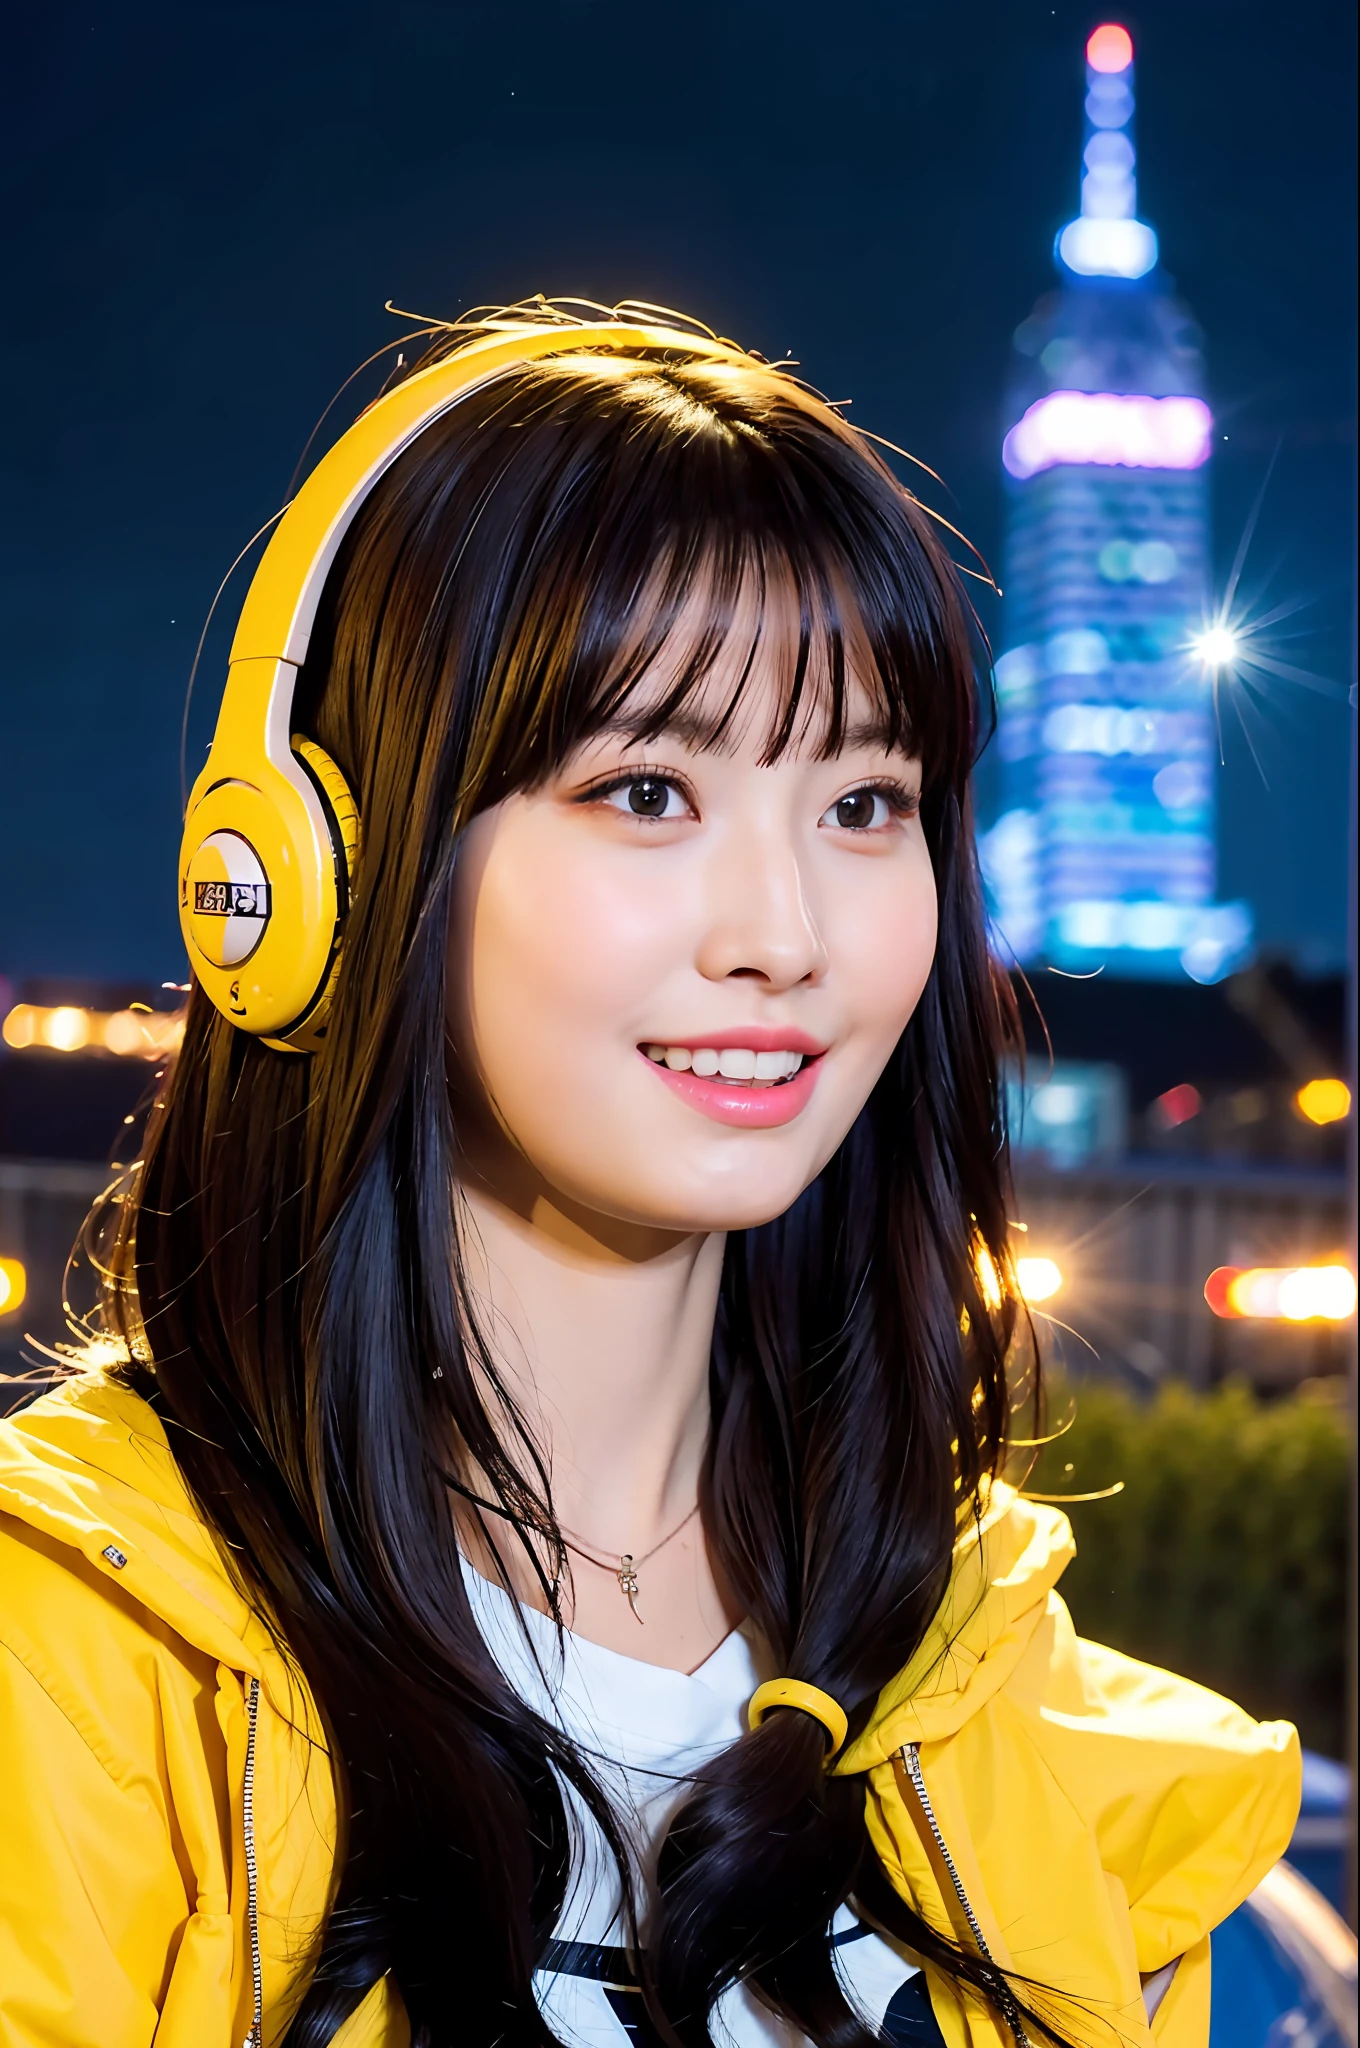 (realista:1.2), Menina de 18 anos, roupa de fones de ouvido, jaqueta amarela, vista de baixo, (cidade:1.4), (Céu estrelado:1.1) , (luzes de neon, brilhar, raio:1.1)